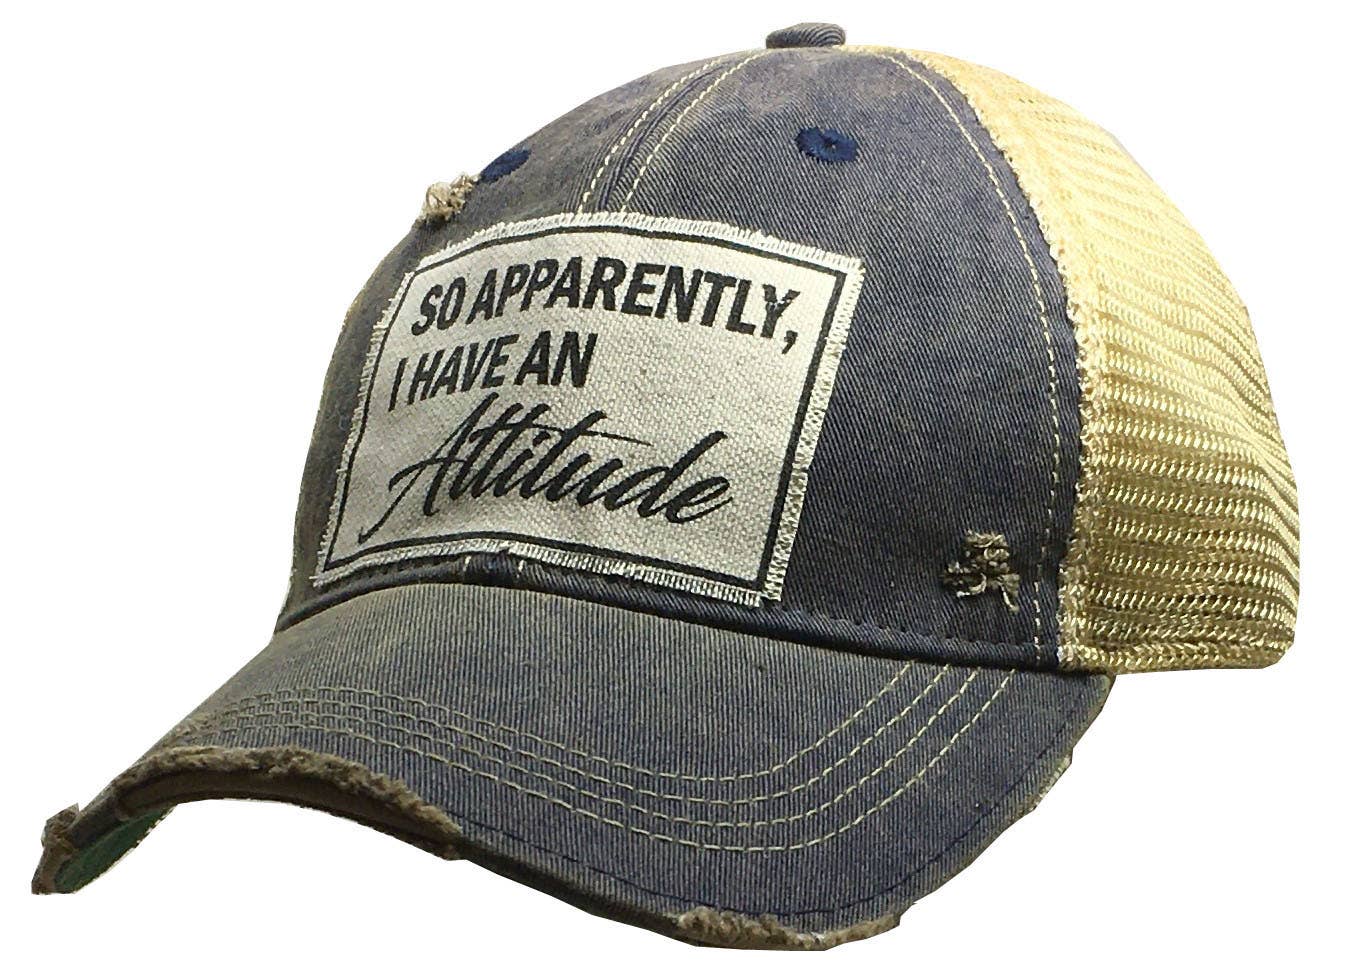 So Apparently, I Have An Attitude Trucker Hat Baseball Cap